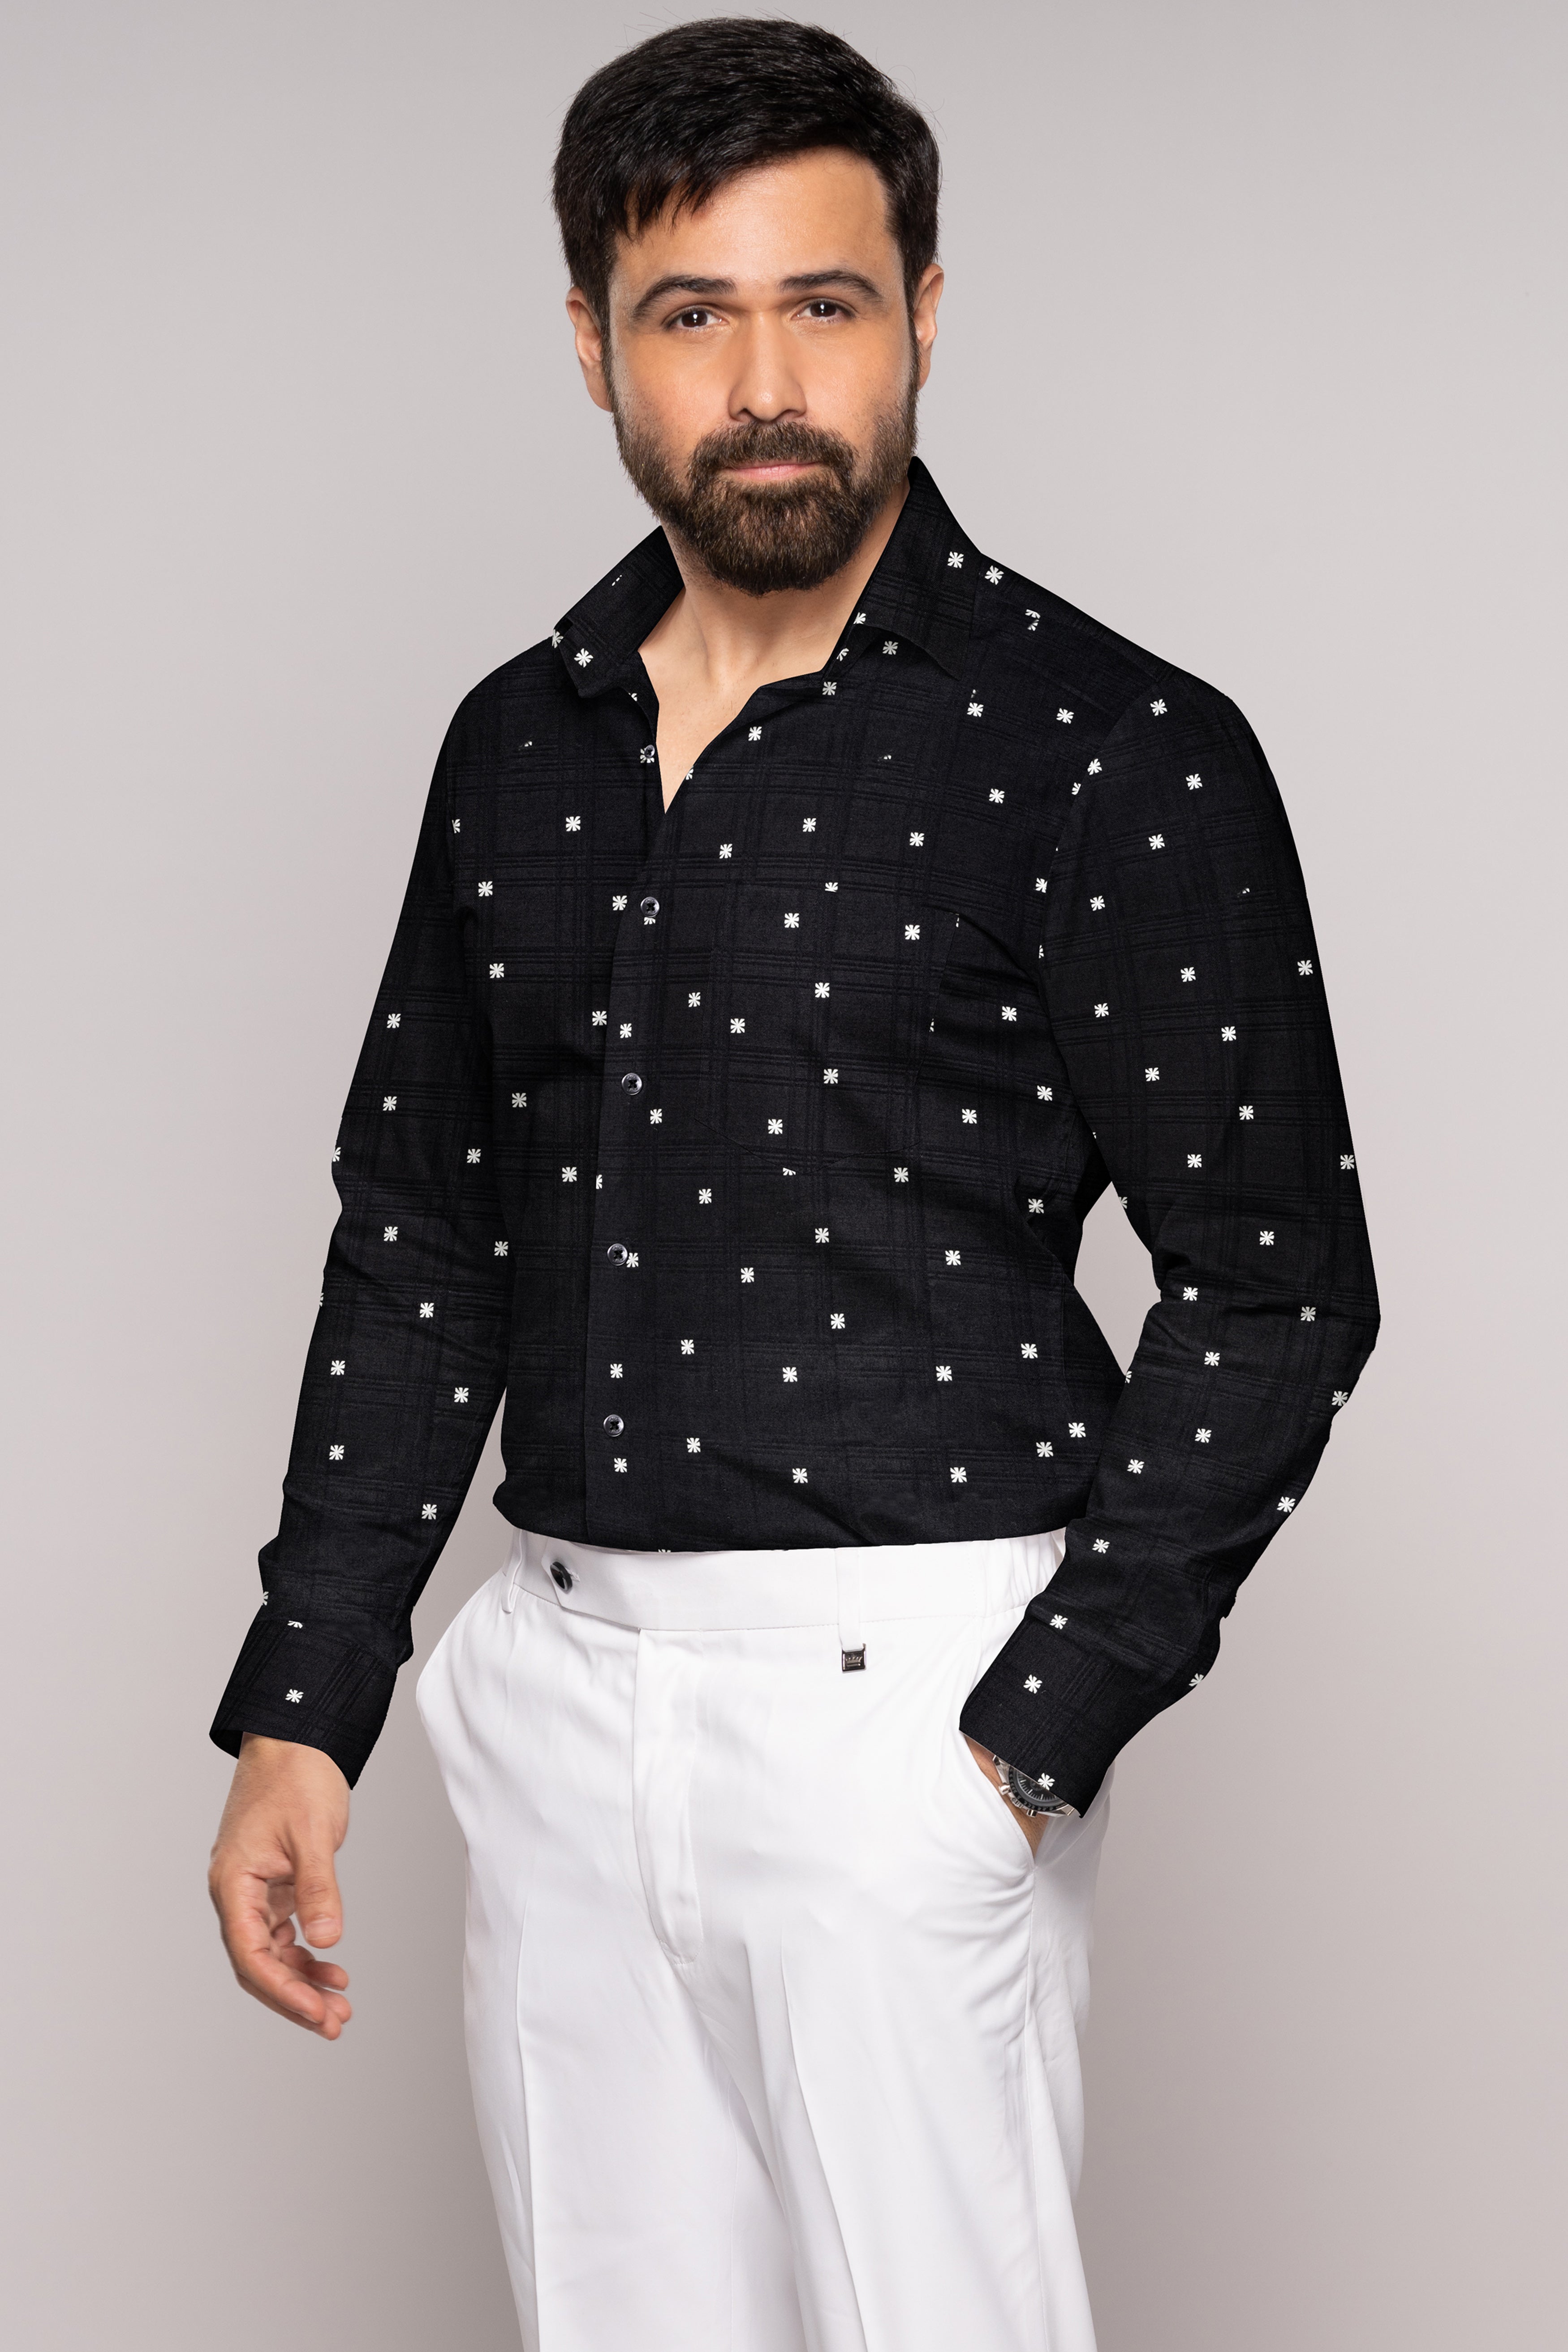 Jade Black and White Subtle Checkered Dobby Textured Premium Giza Cotton Shirt